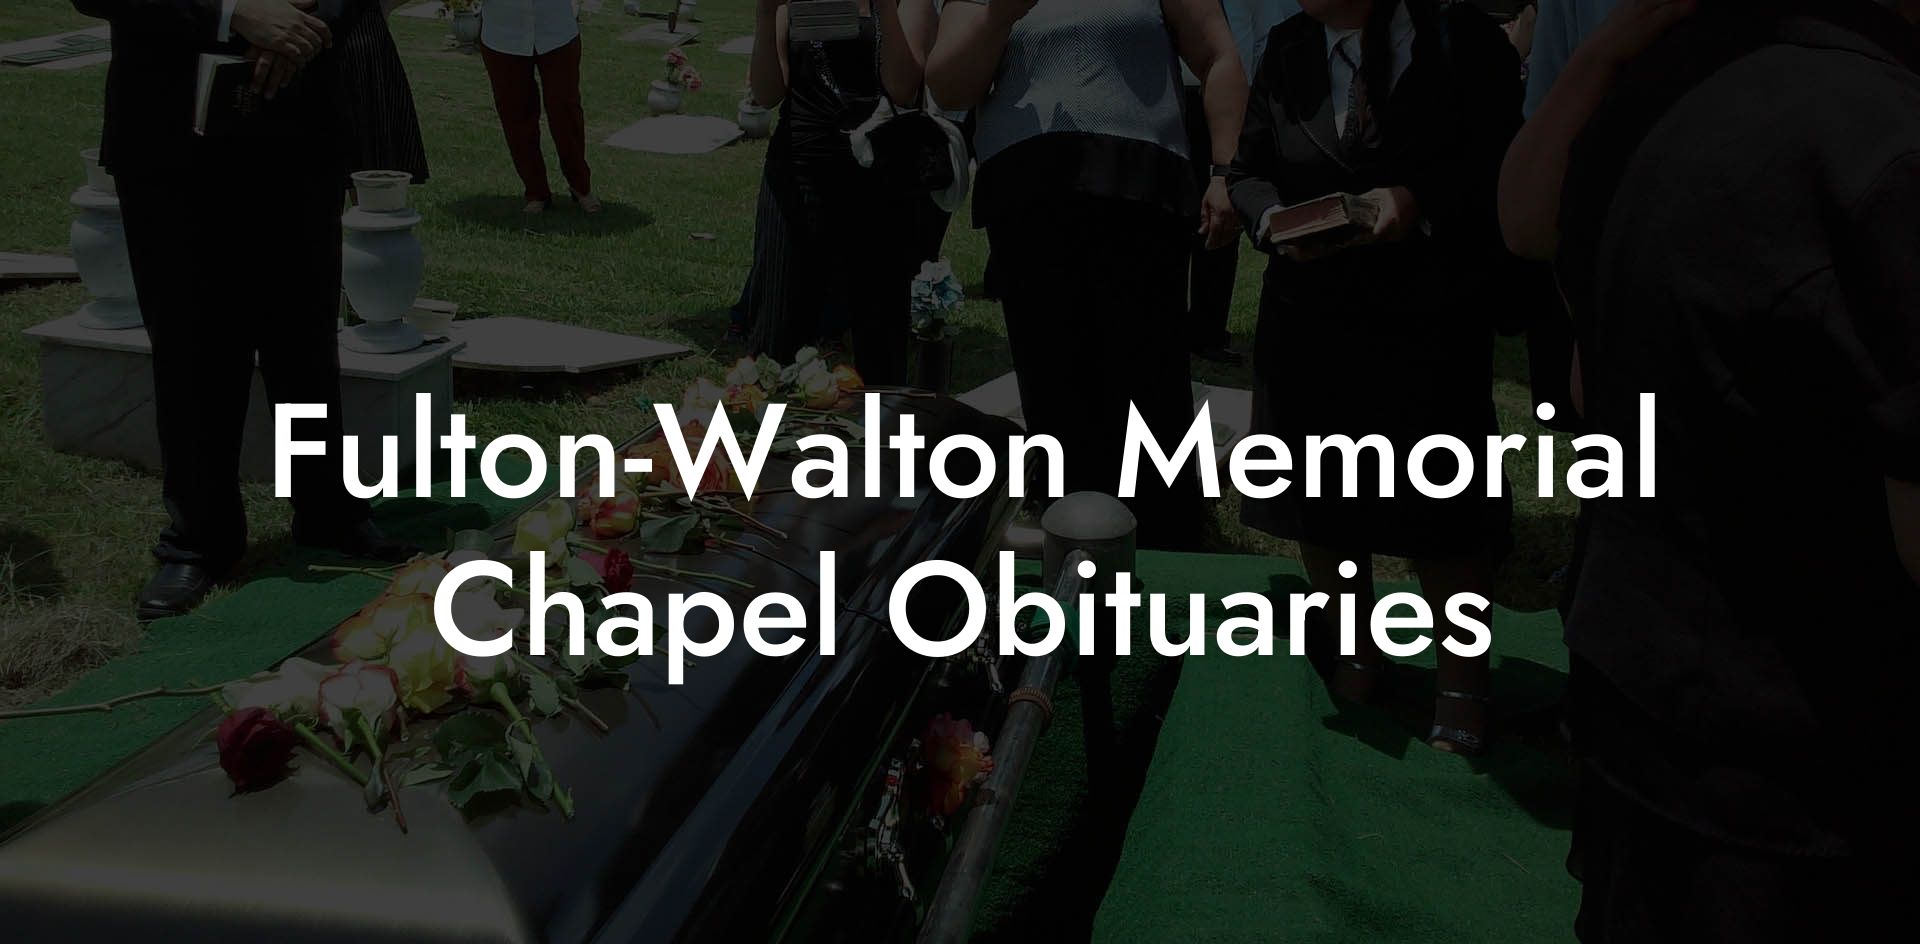 Fulton-Walton Memorial Chapel Obituaries